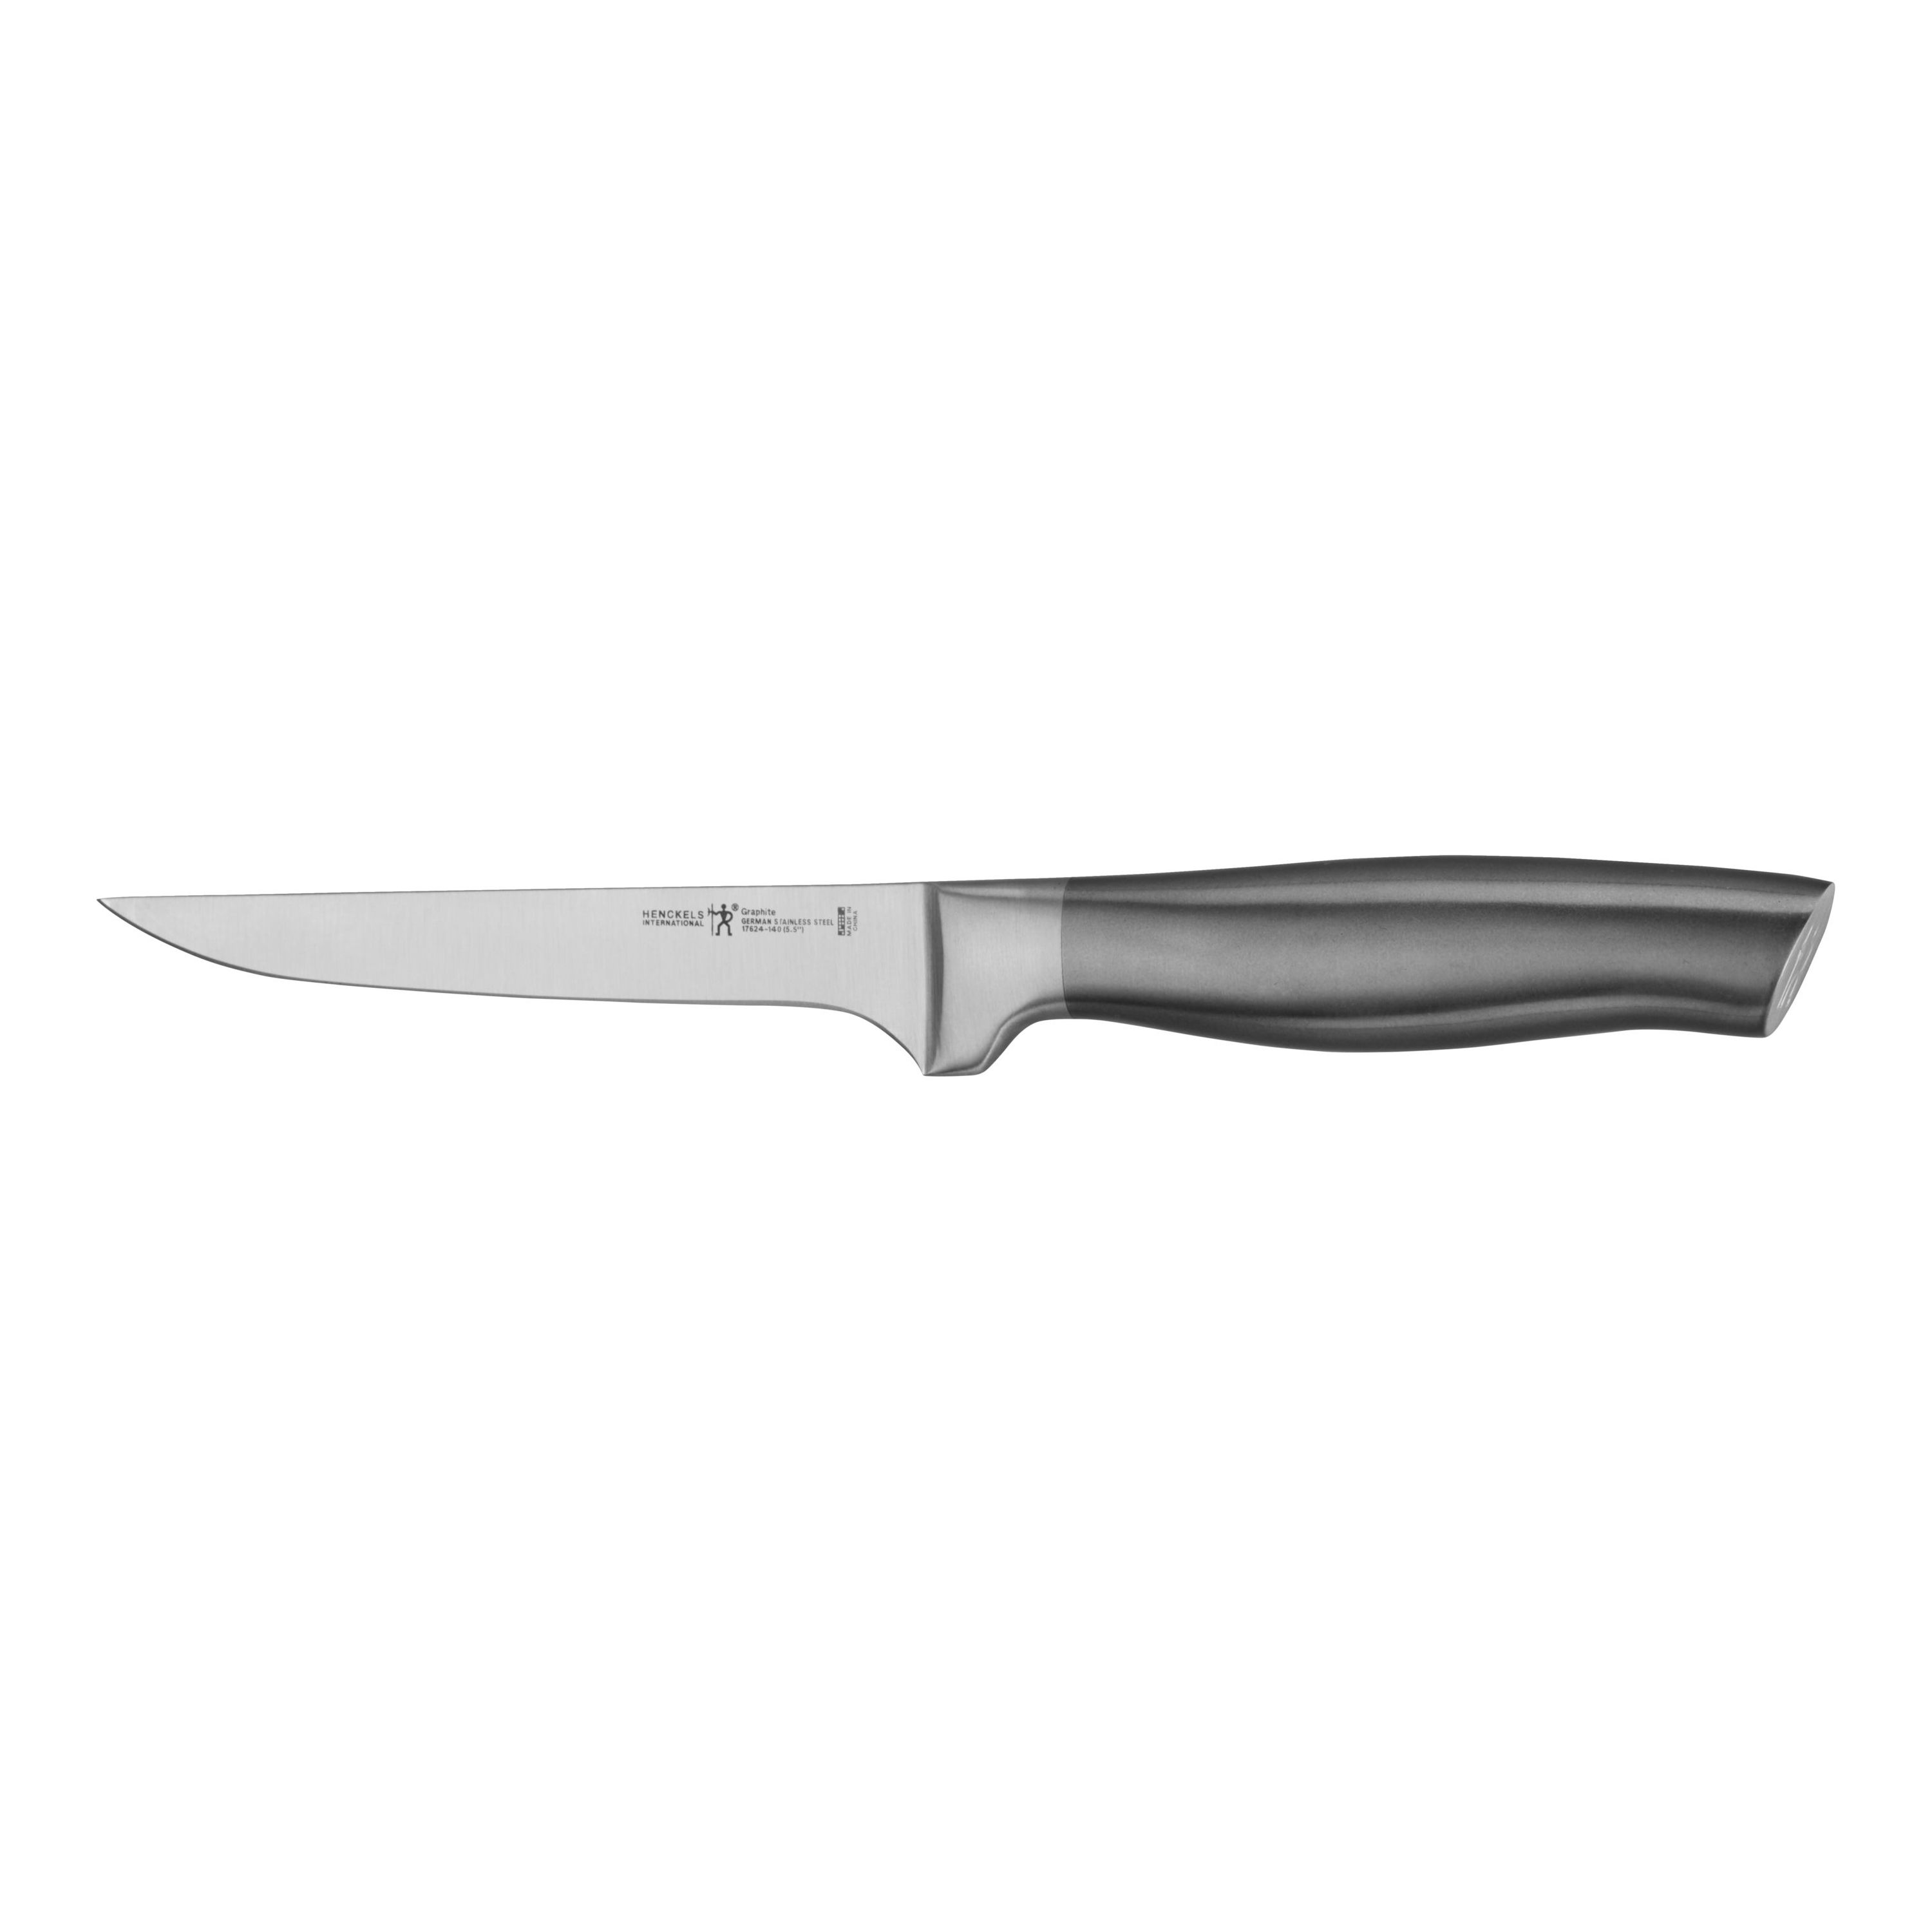 Henckels Graphite 5.5-Inch, Boning Knife